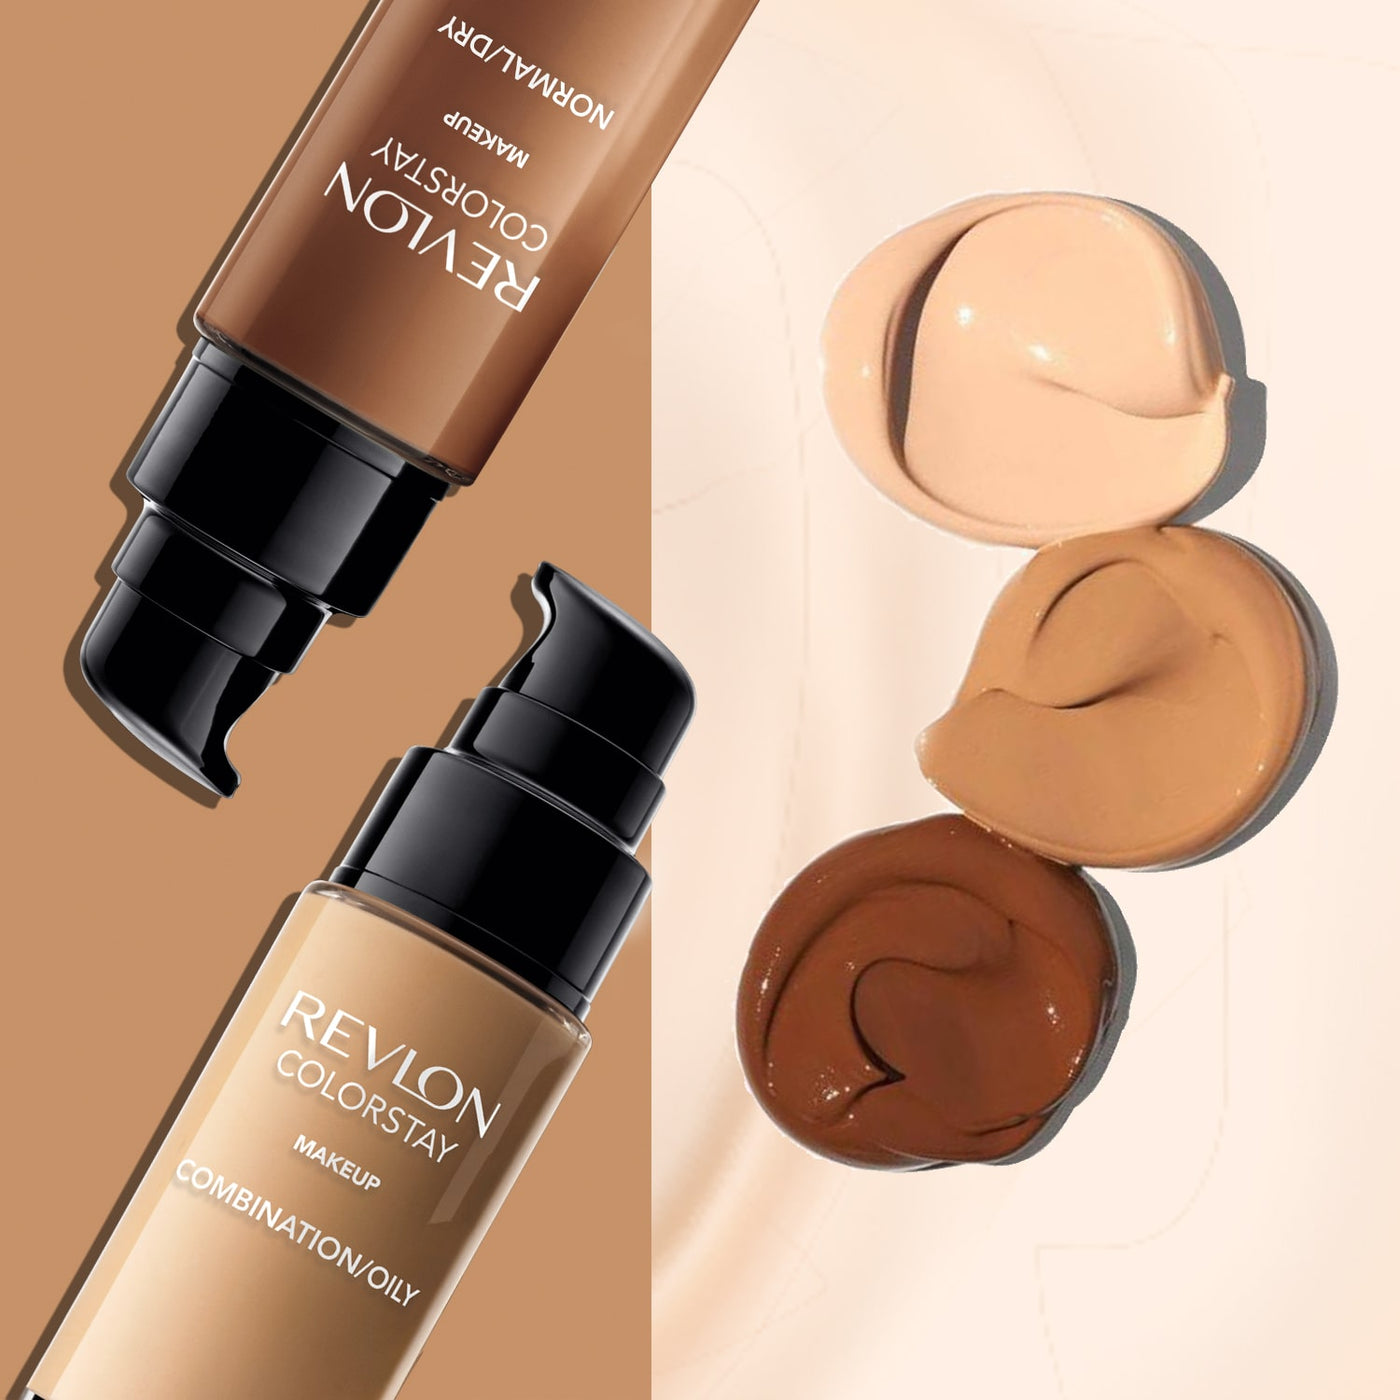 Revlon ColorStay Makeup for Normal to dry Skin SPF20